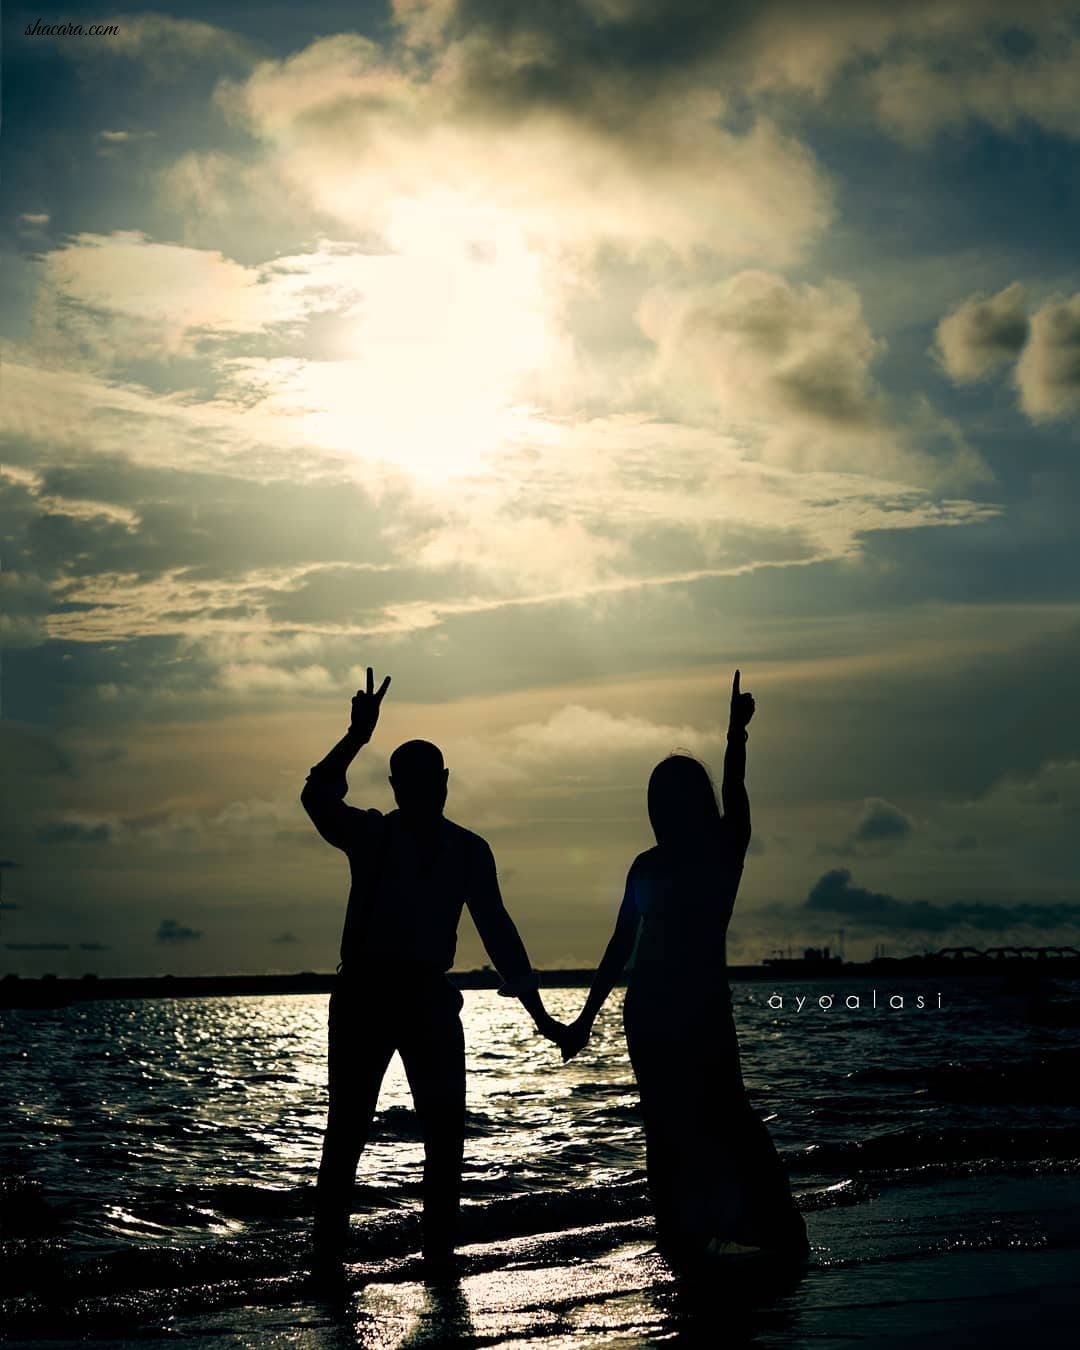 Yomi & Grace Makun Celebrate Their Wedding Anniversary: ‘3 Years Of Unbreakable Bond’